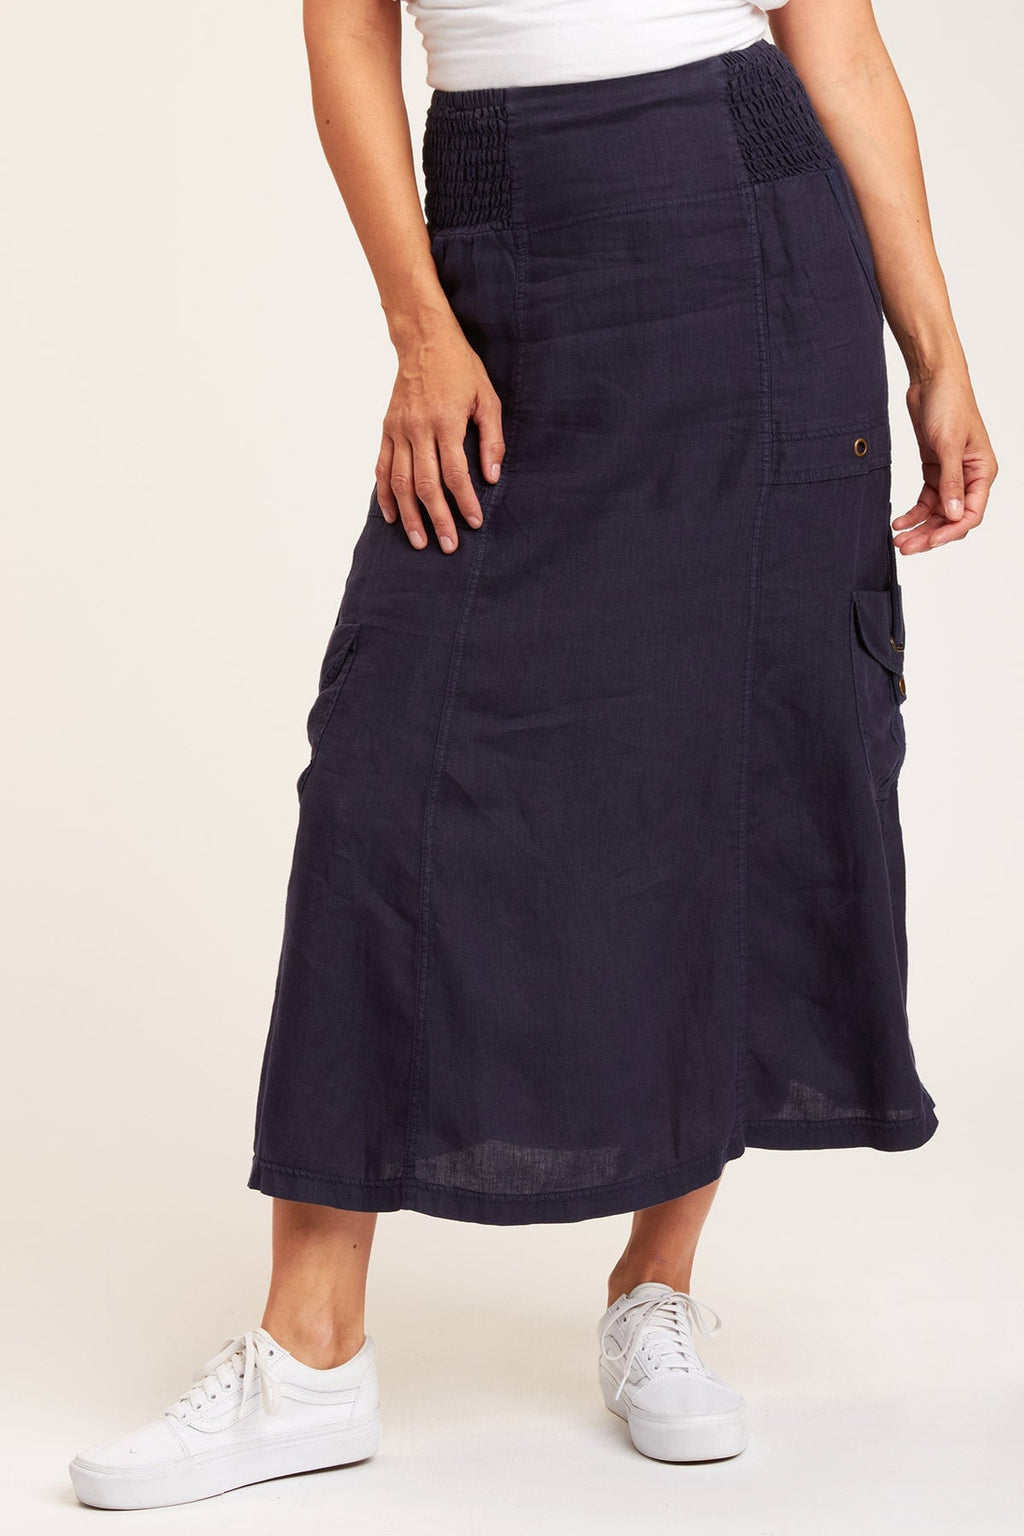 – Skirt Francine Navy XCVI in Maxi